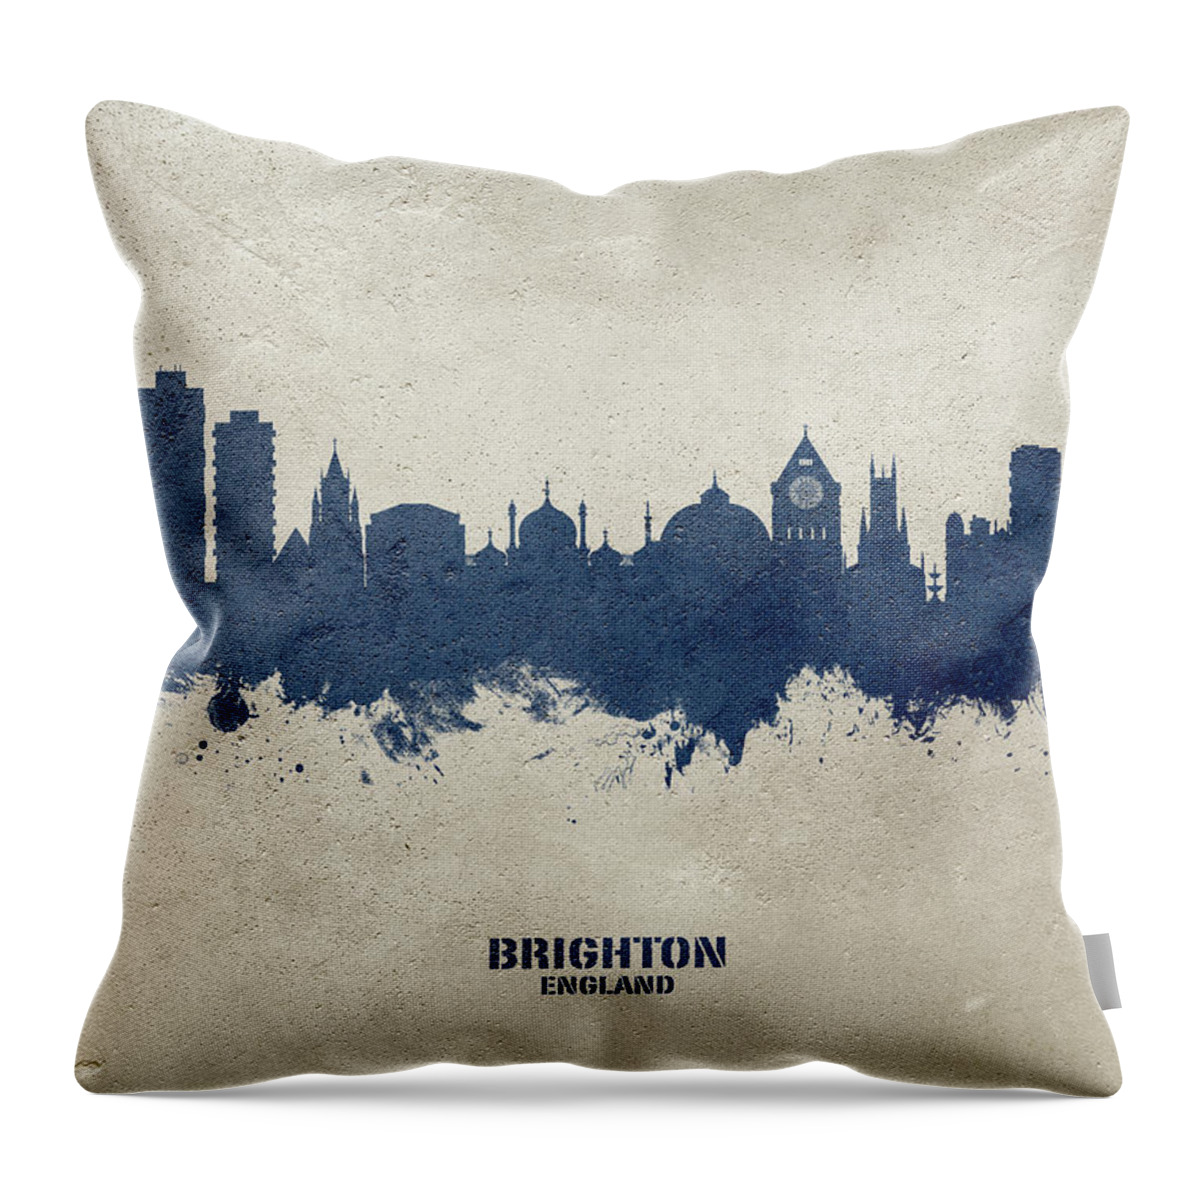 Brighton Throw Pillow featuring the digital art Brighton England Skyline #40 by Michael Tompsett